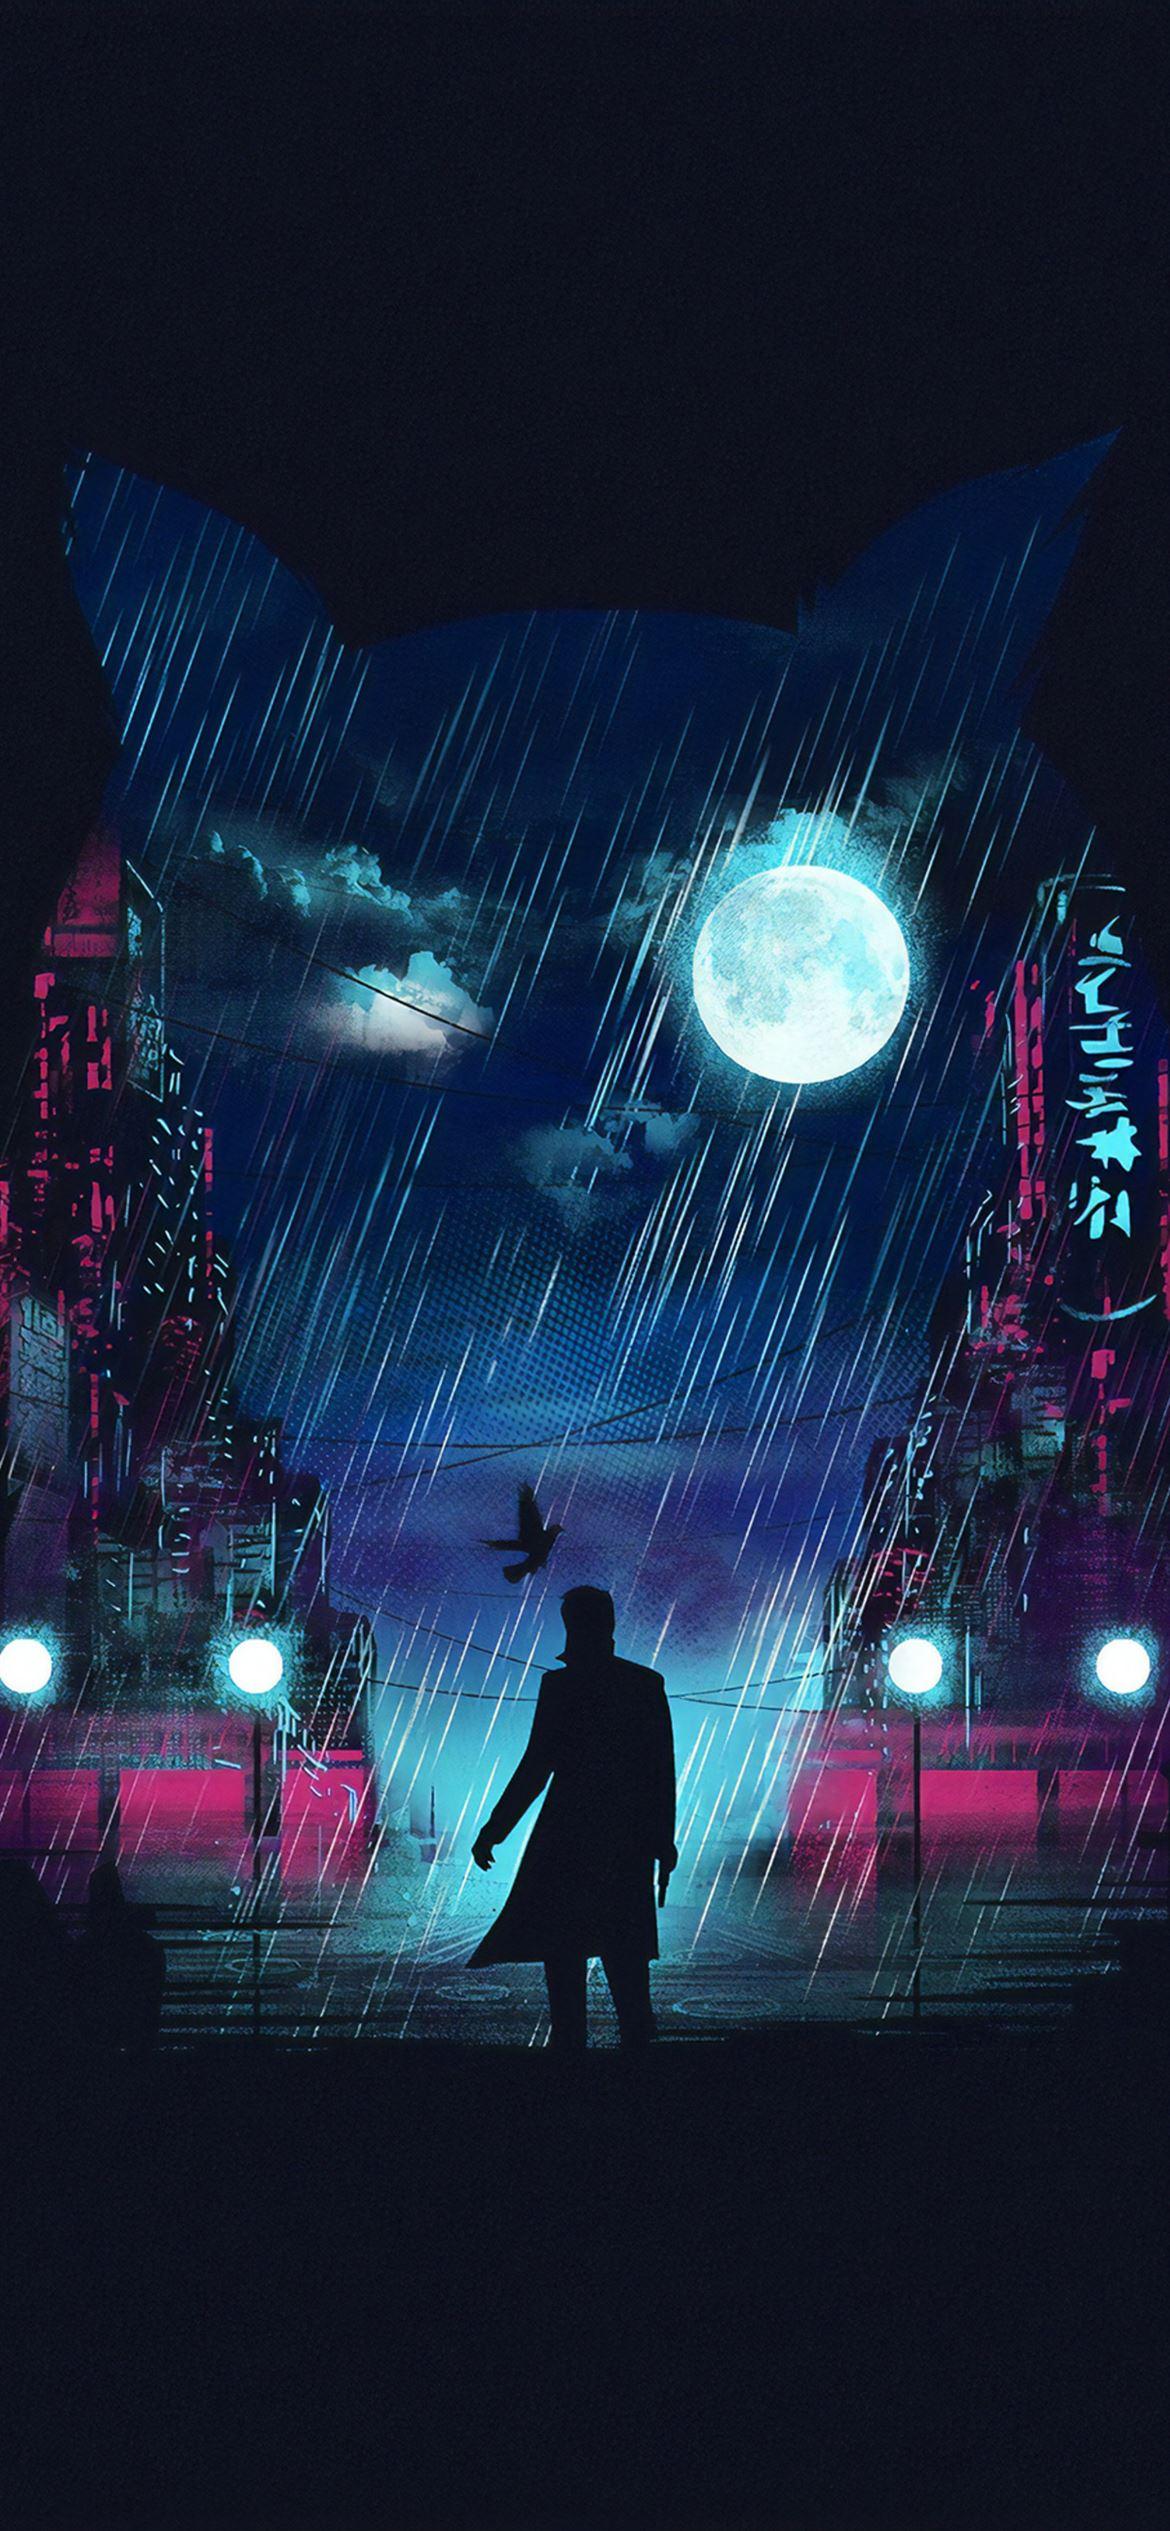 Blade Runner Digital Art 4k iPhone Wallpaper